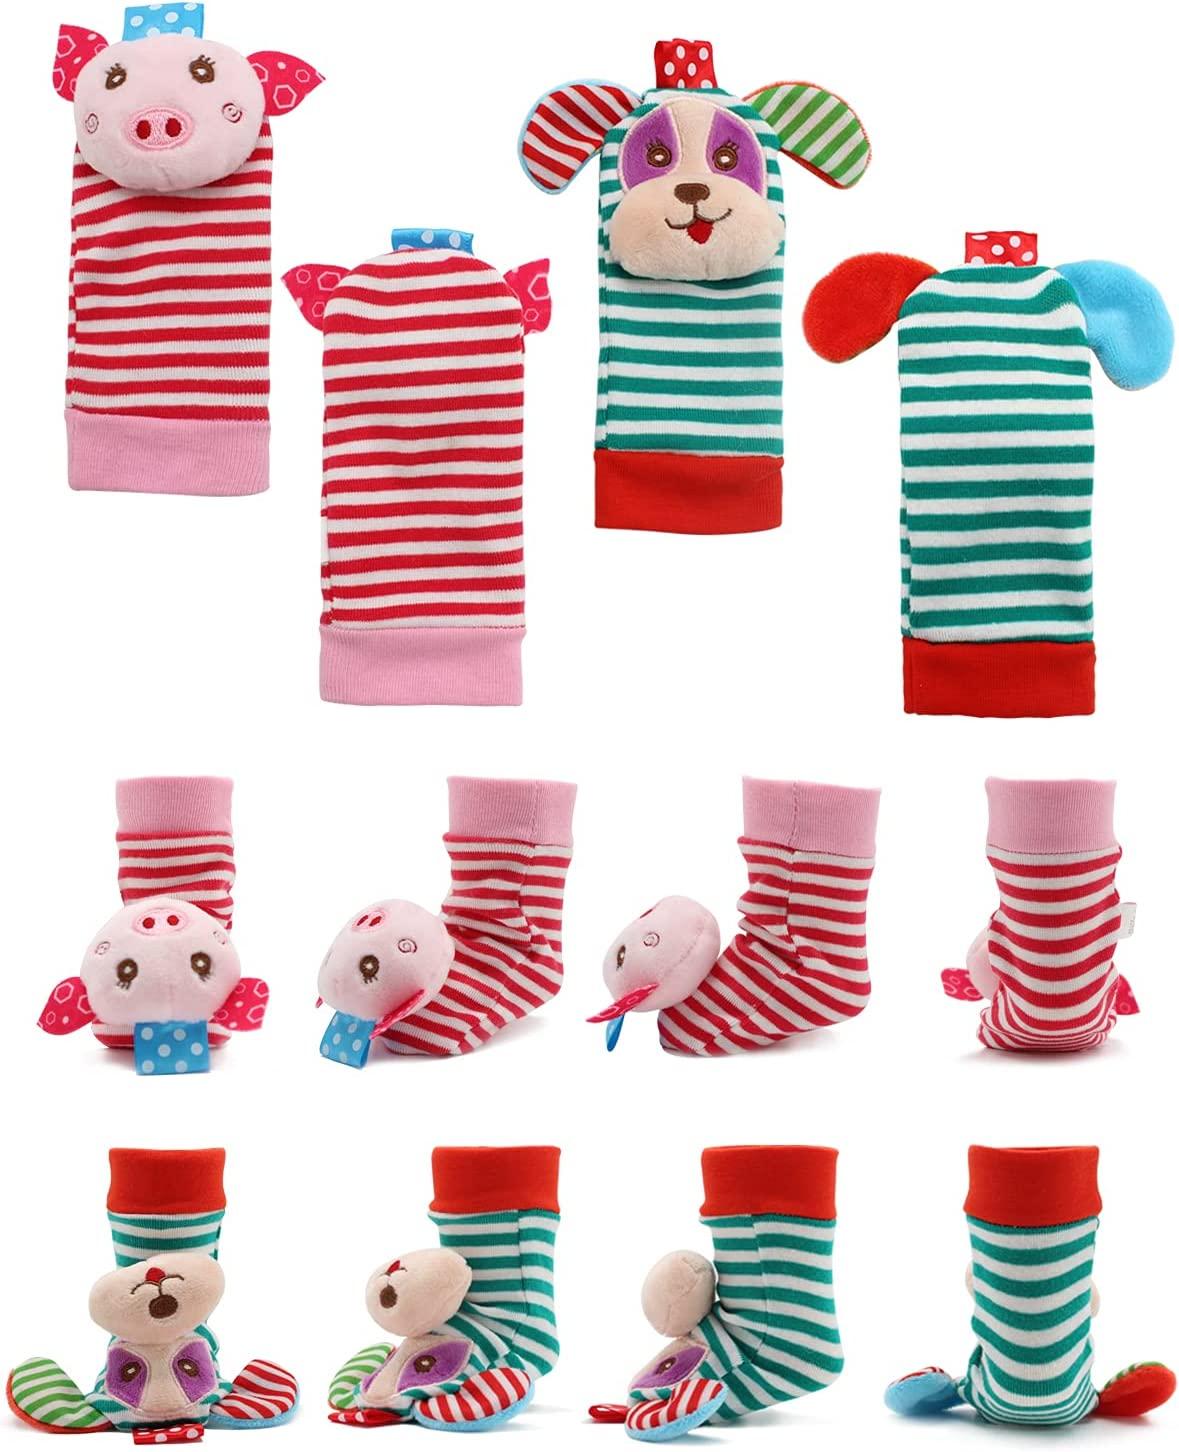 7 PCS Baby Rattle Toy Set, Wrist Rattles Foot Finder Rattle Sock